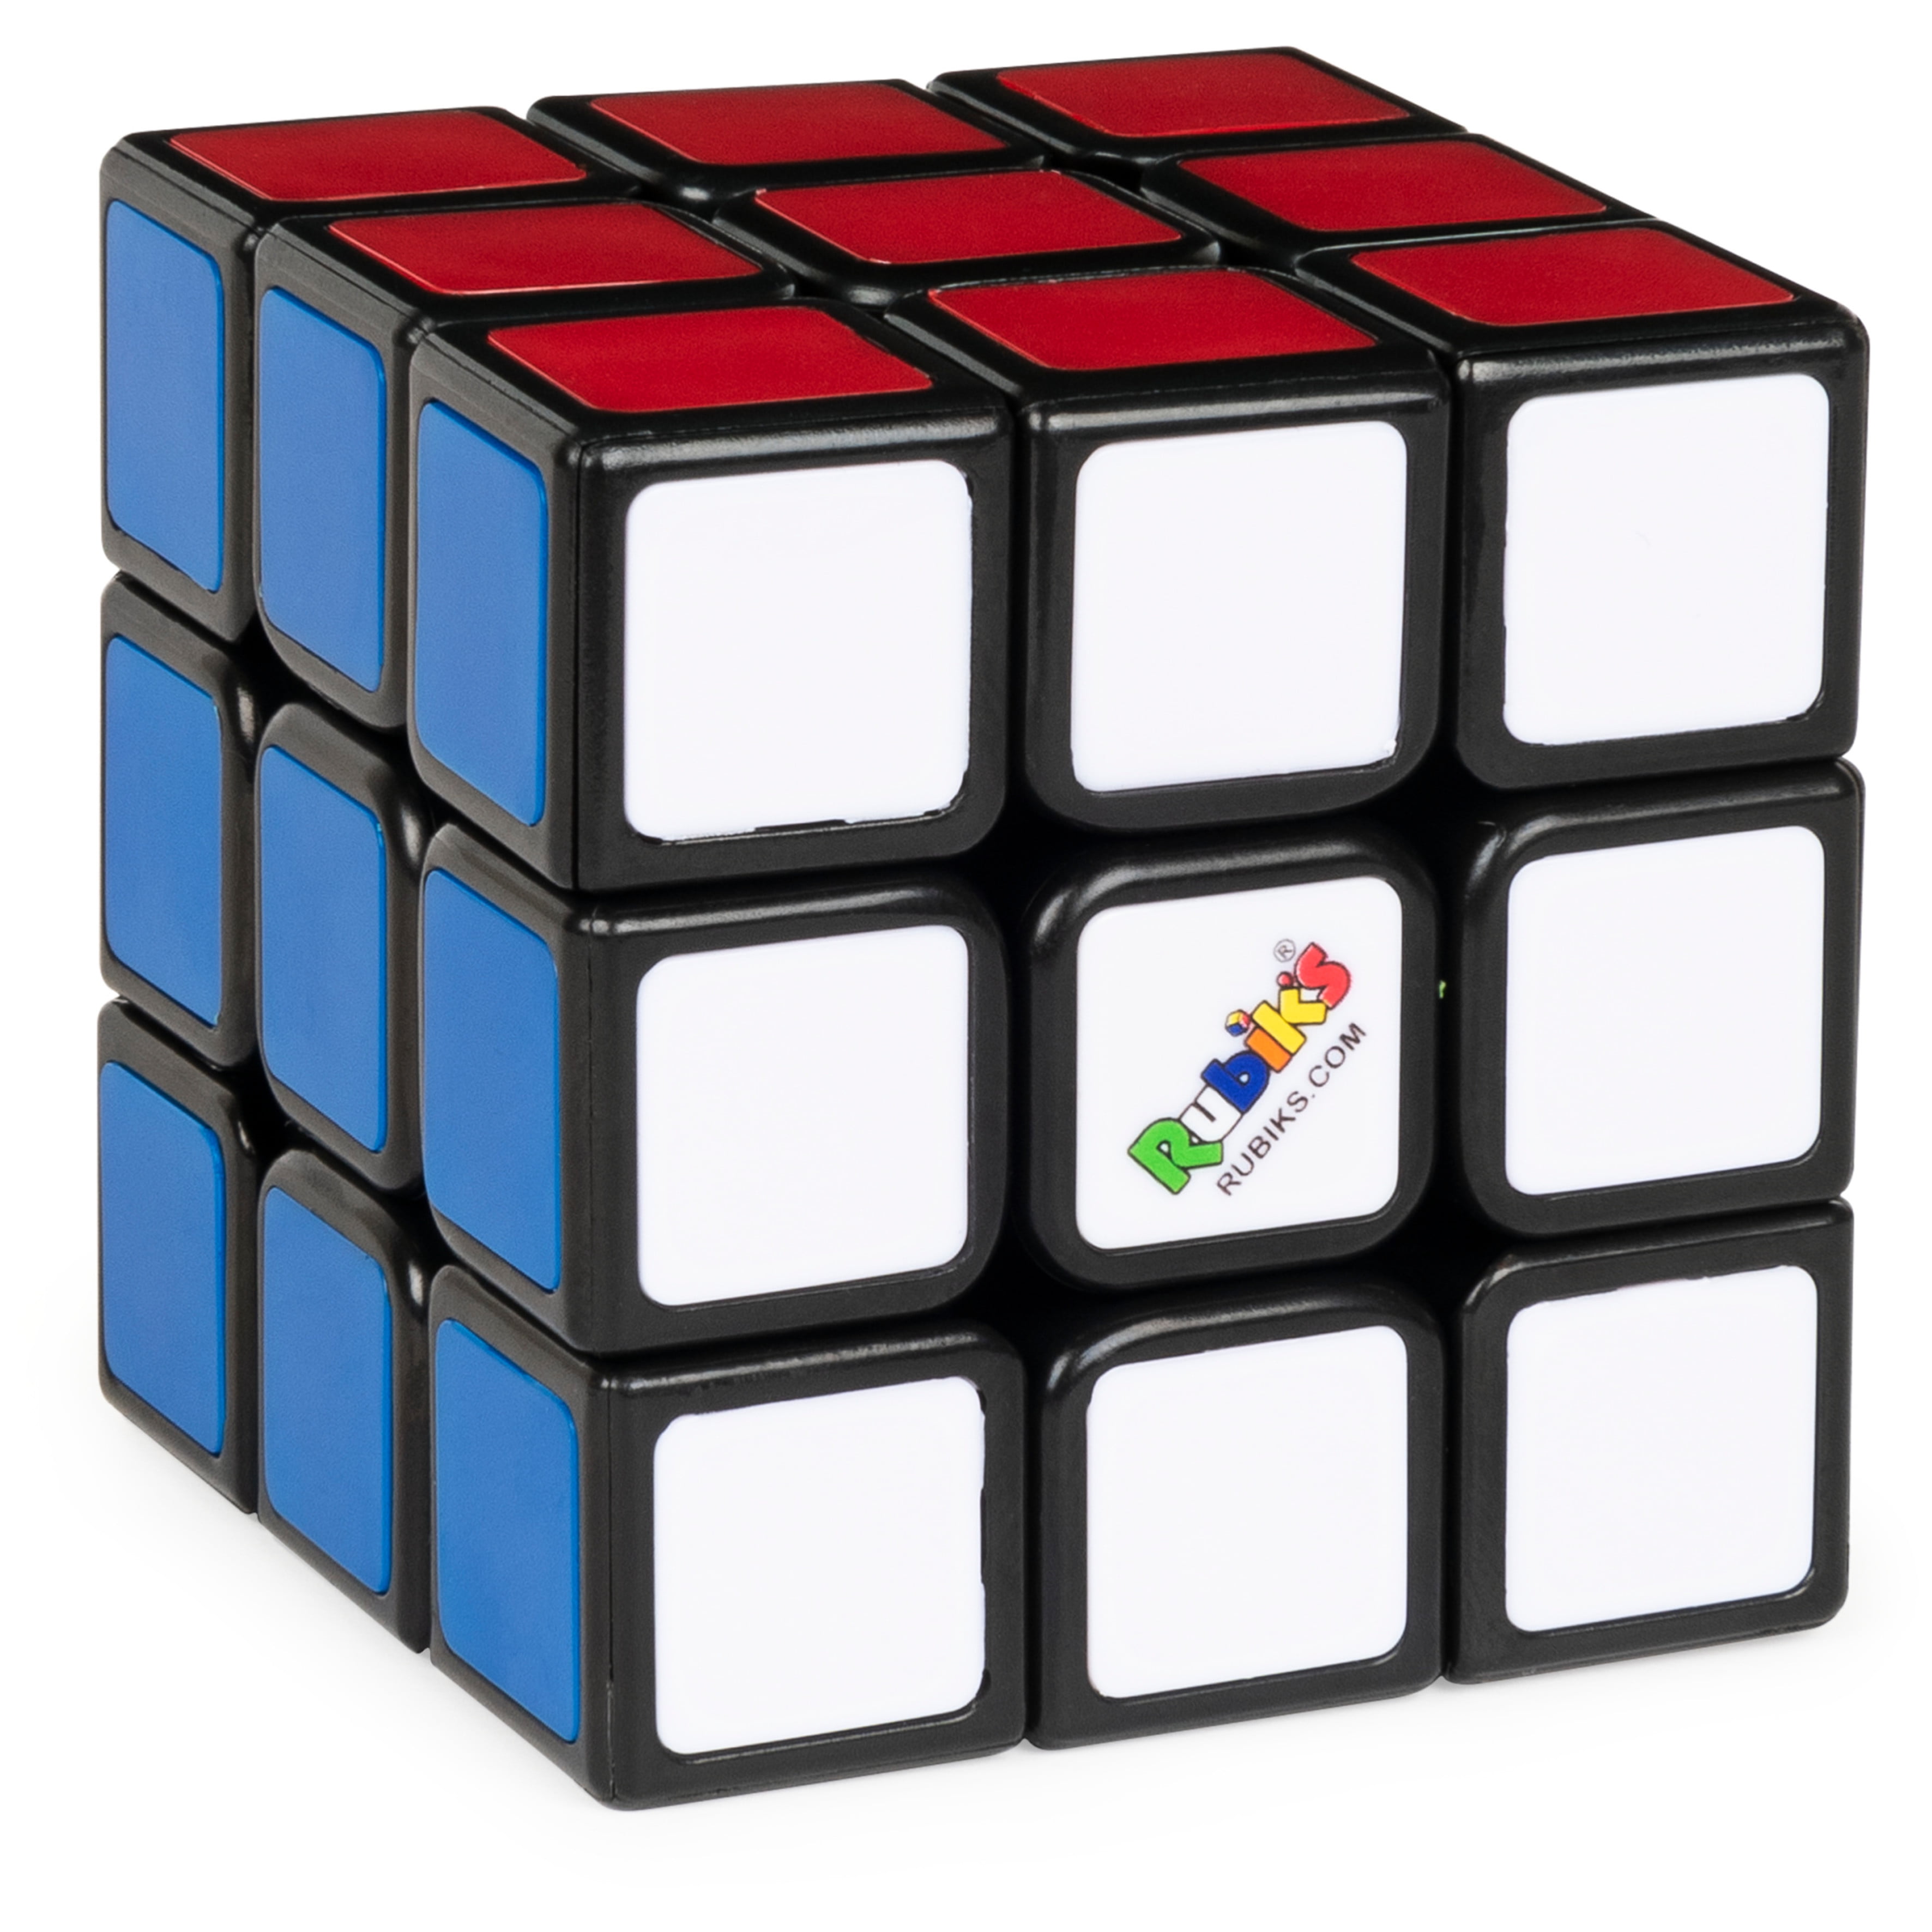 Rubik's Cube Rubik’s Cube, The Original 3x3 Color-Matching Puzzle